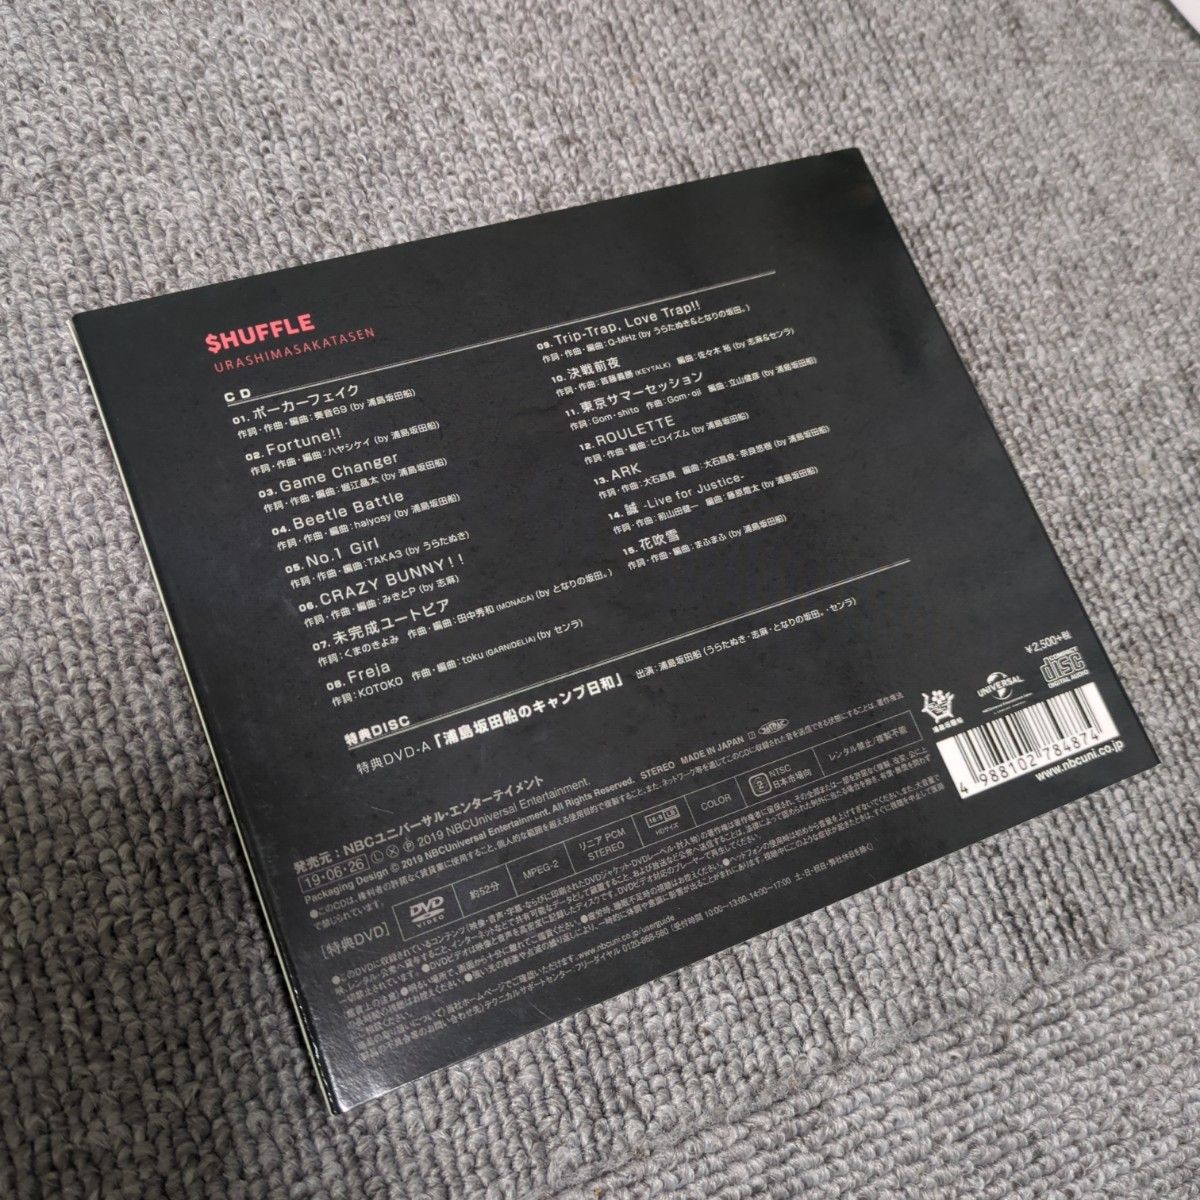 浦島坂田船 SHUFFLE CD